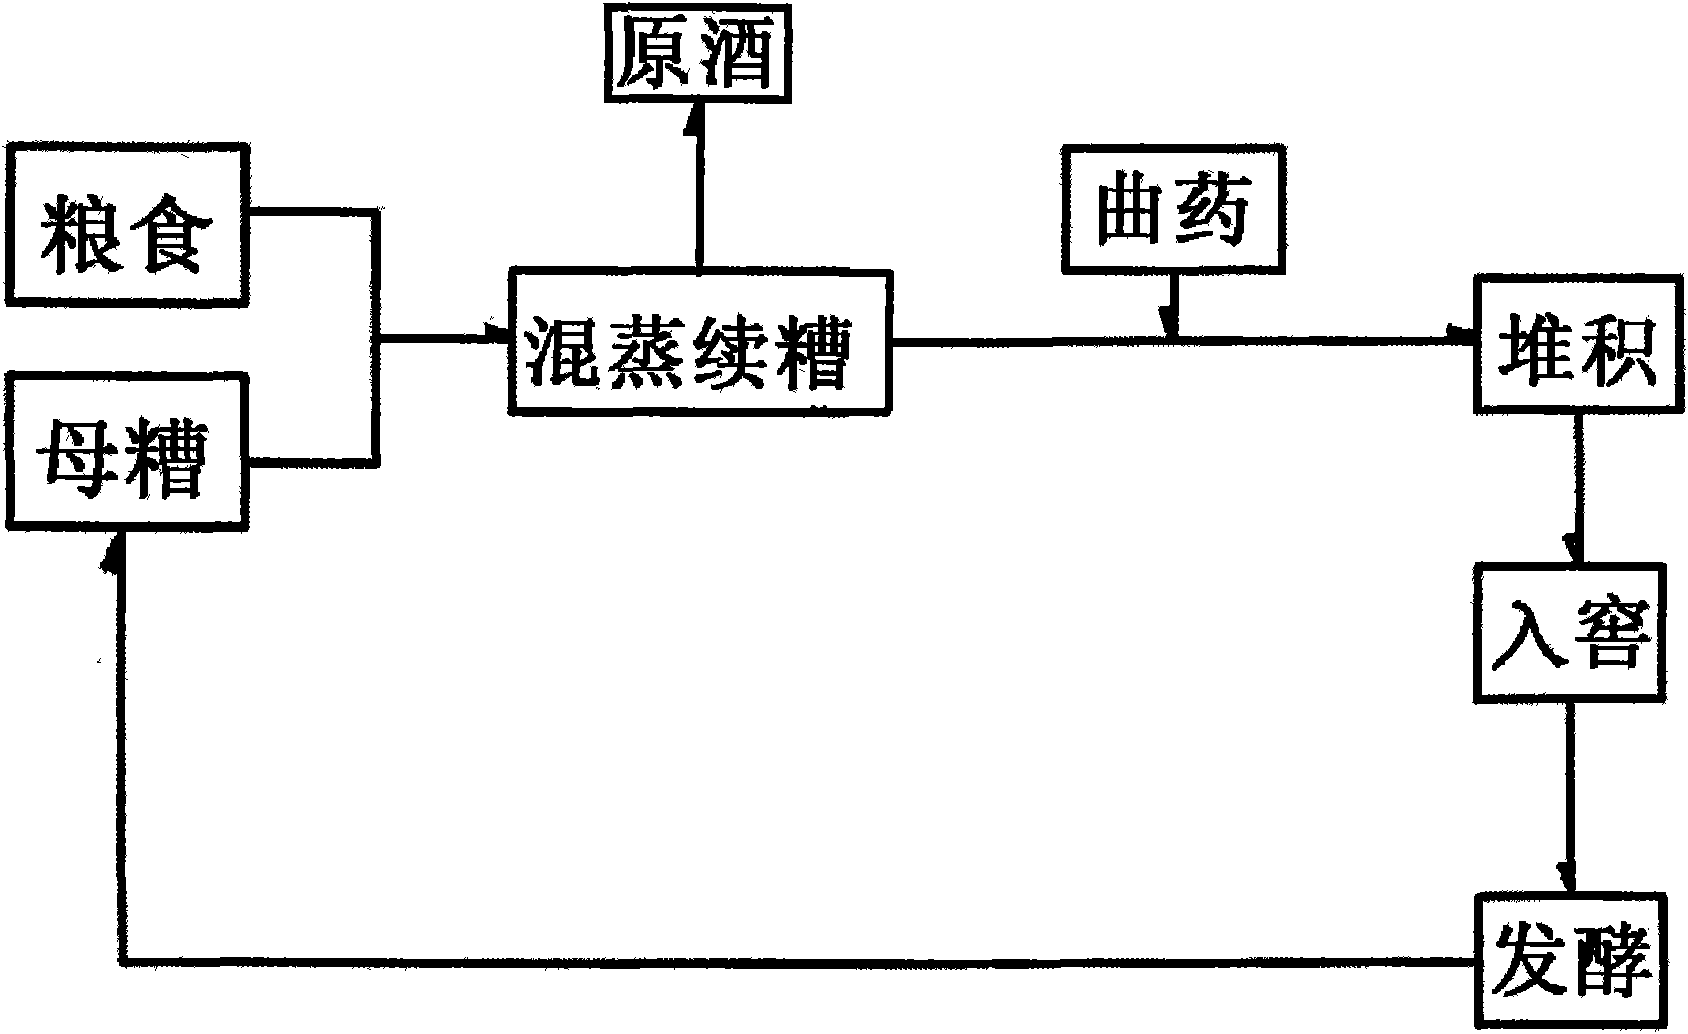 Method for producing multi-grain liquor of Luzhou-flavor and Maotai-flavor